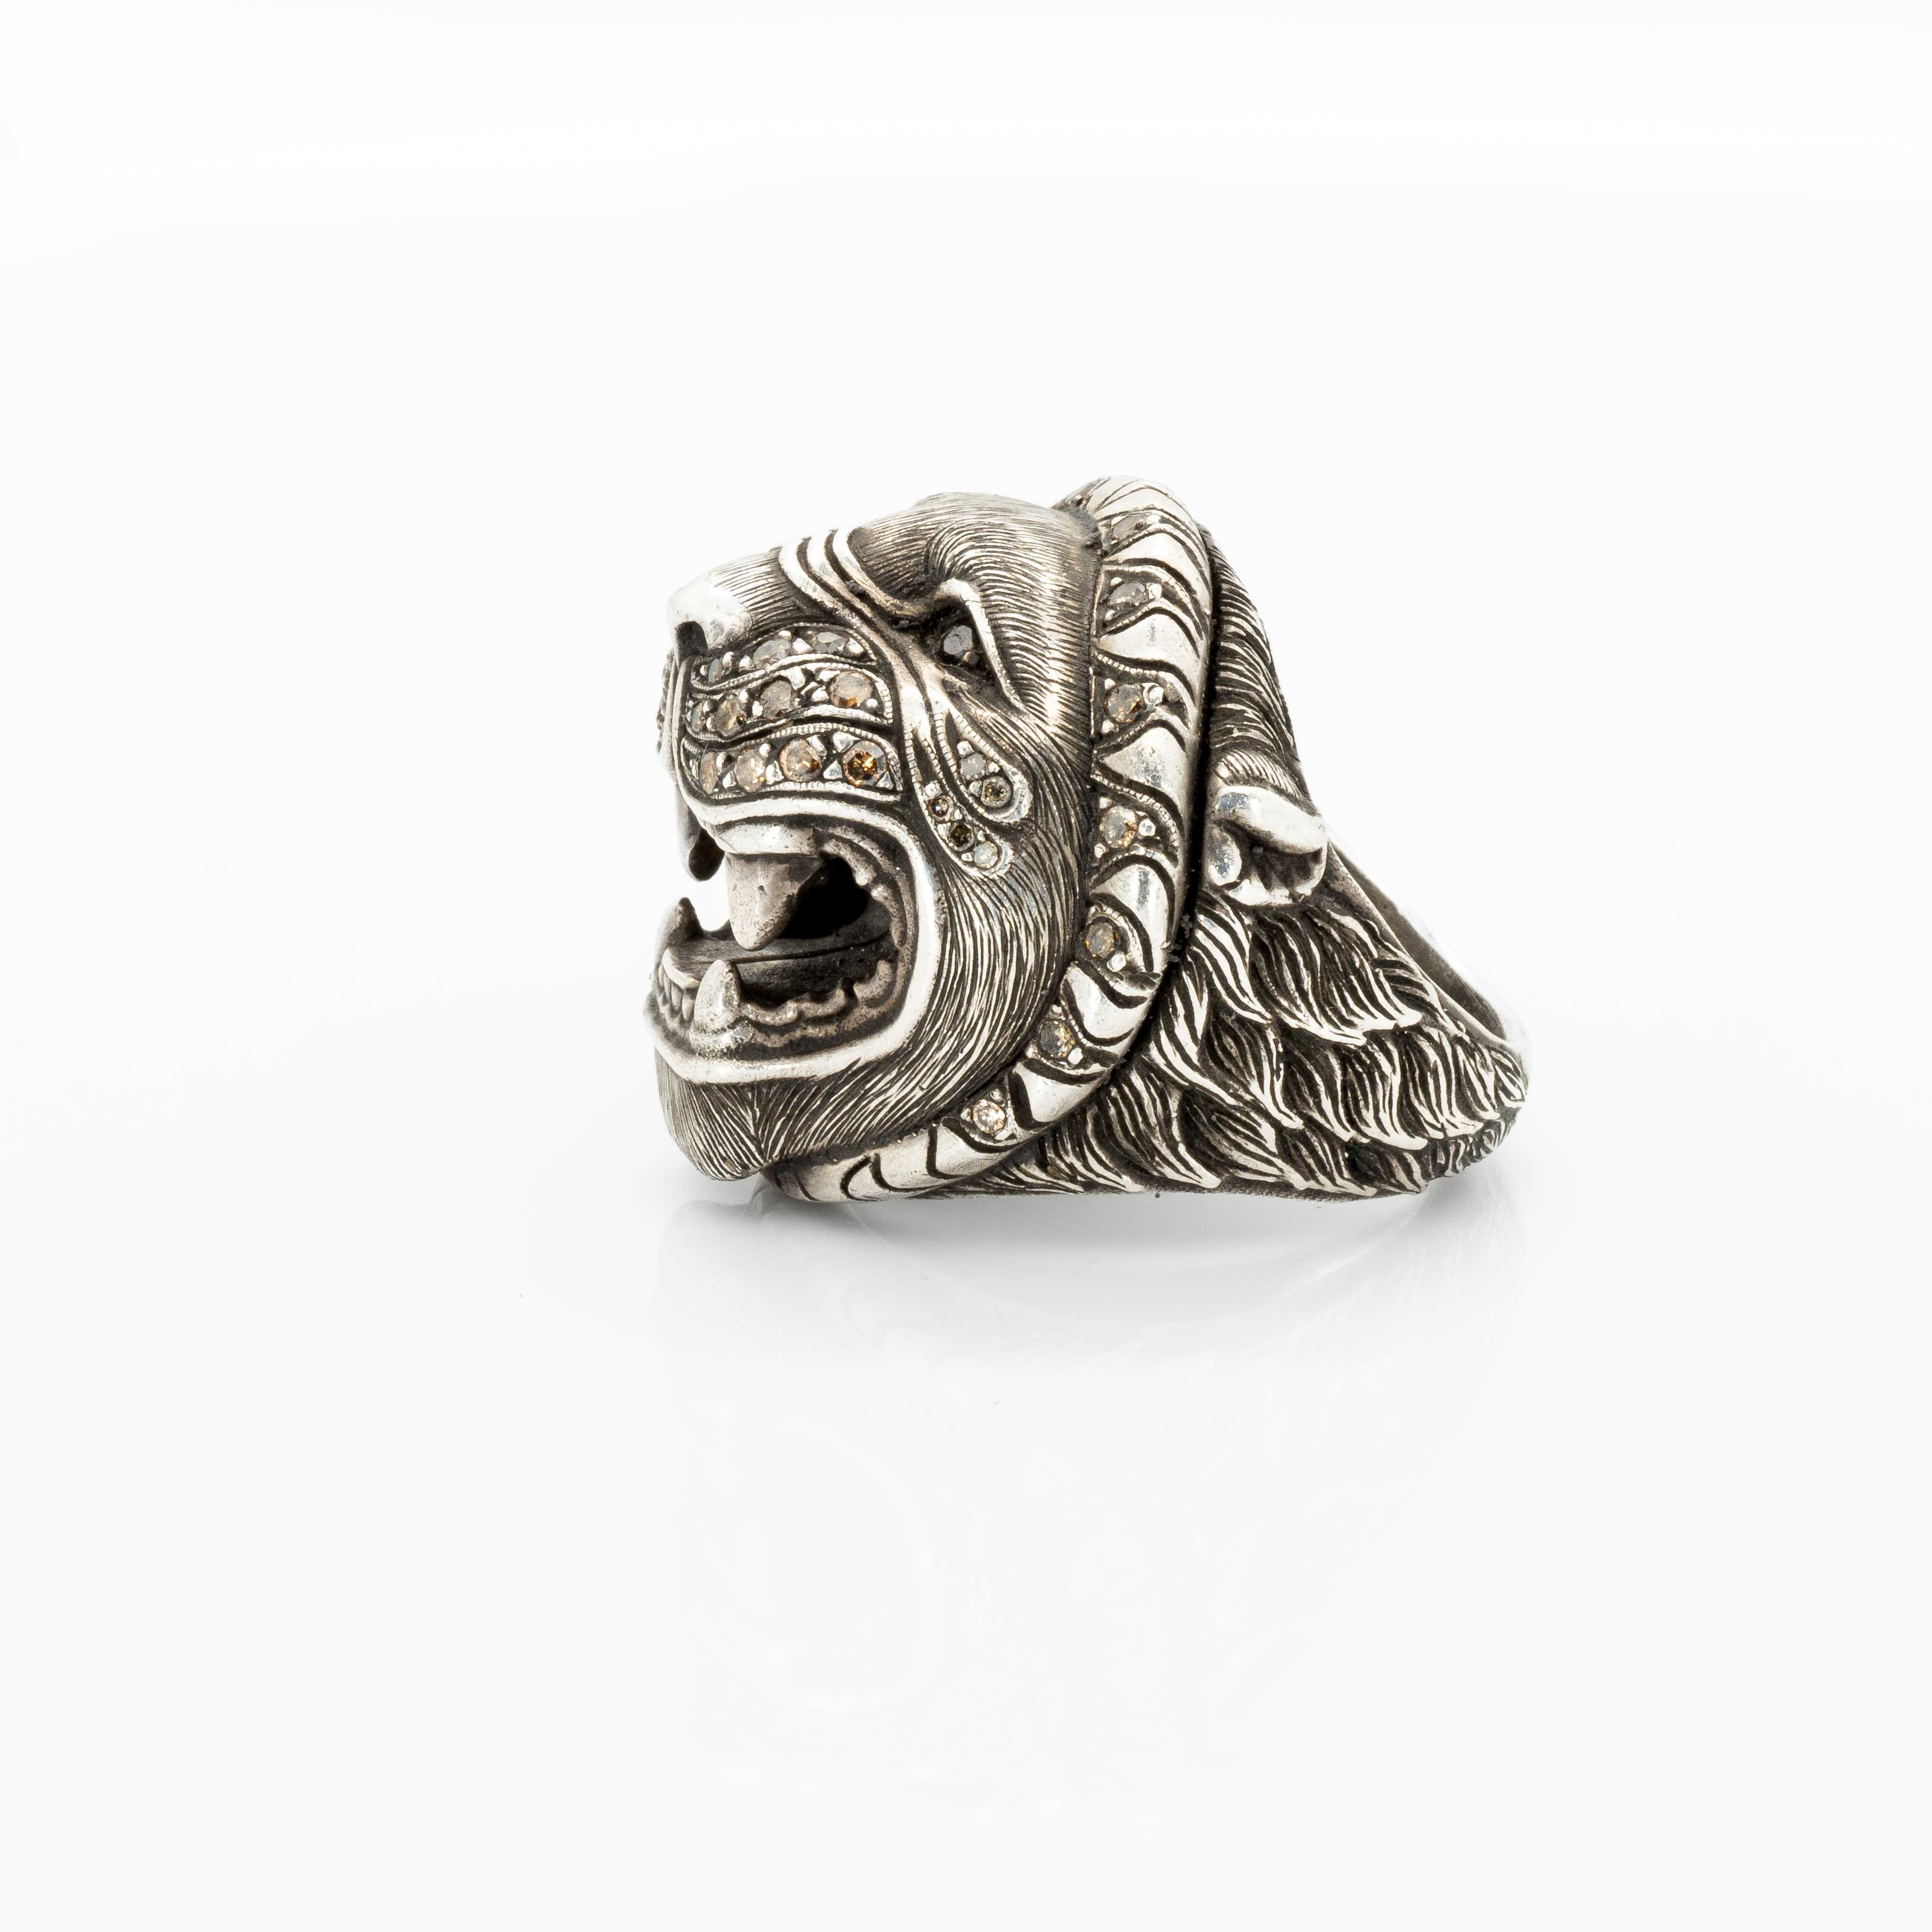 Unusual Vintage 925 Sterling Silver Lion's Head Men's Ring Size 9.5 Unisex  | eBay